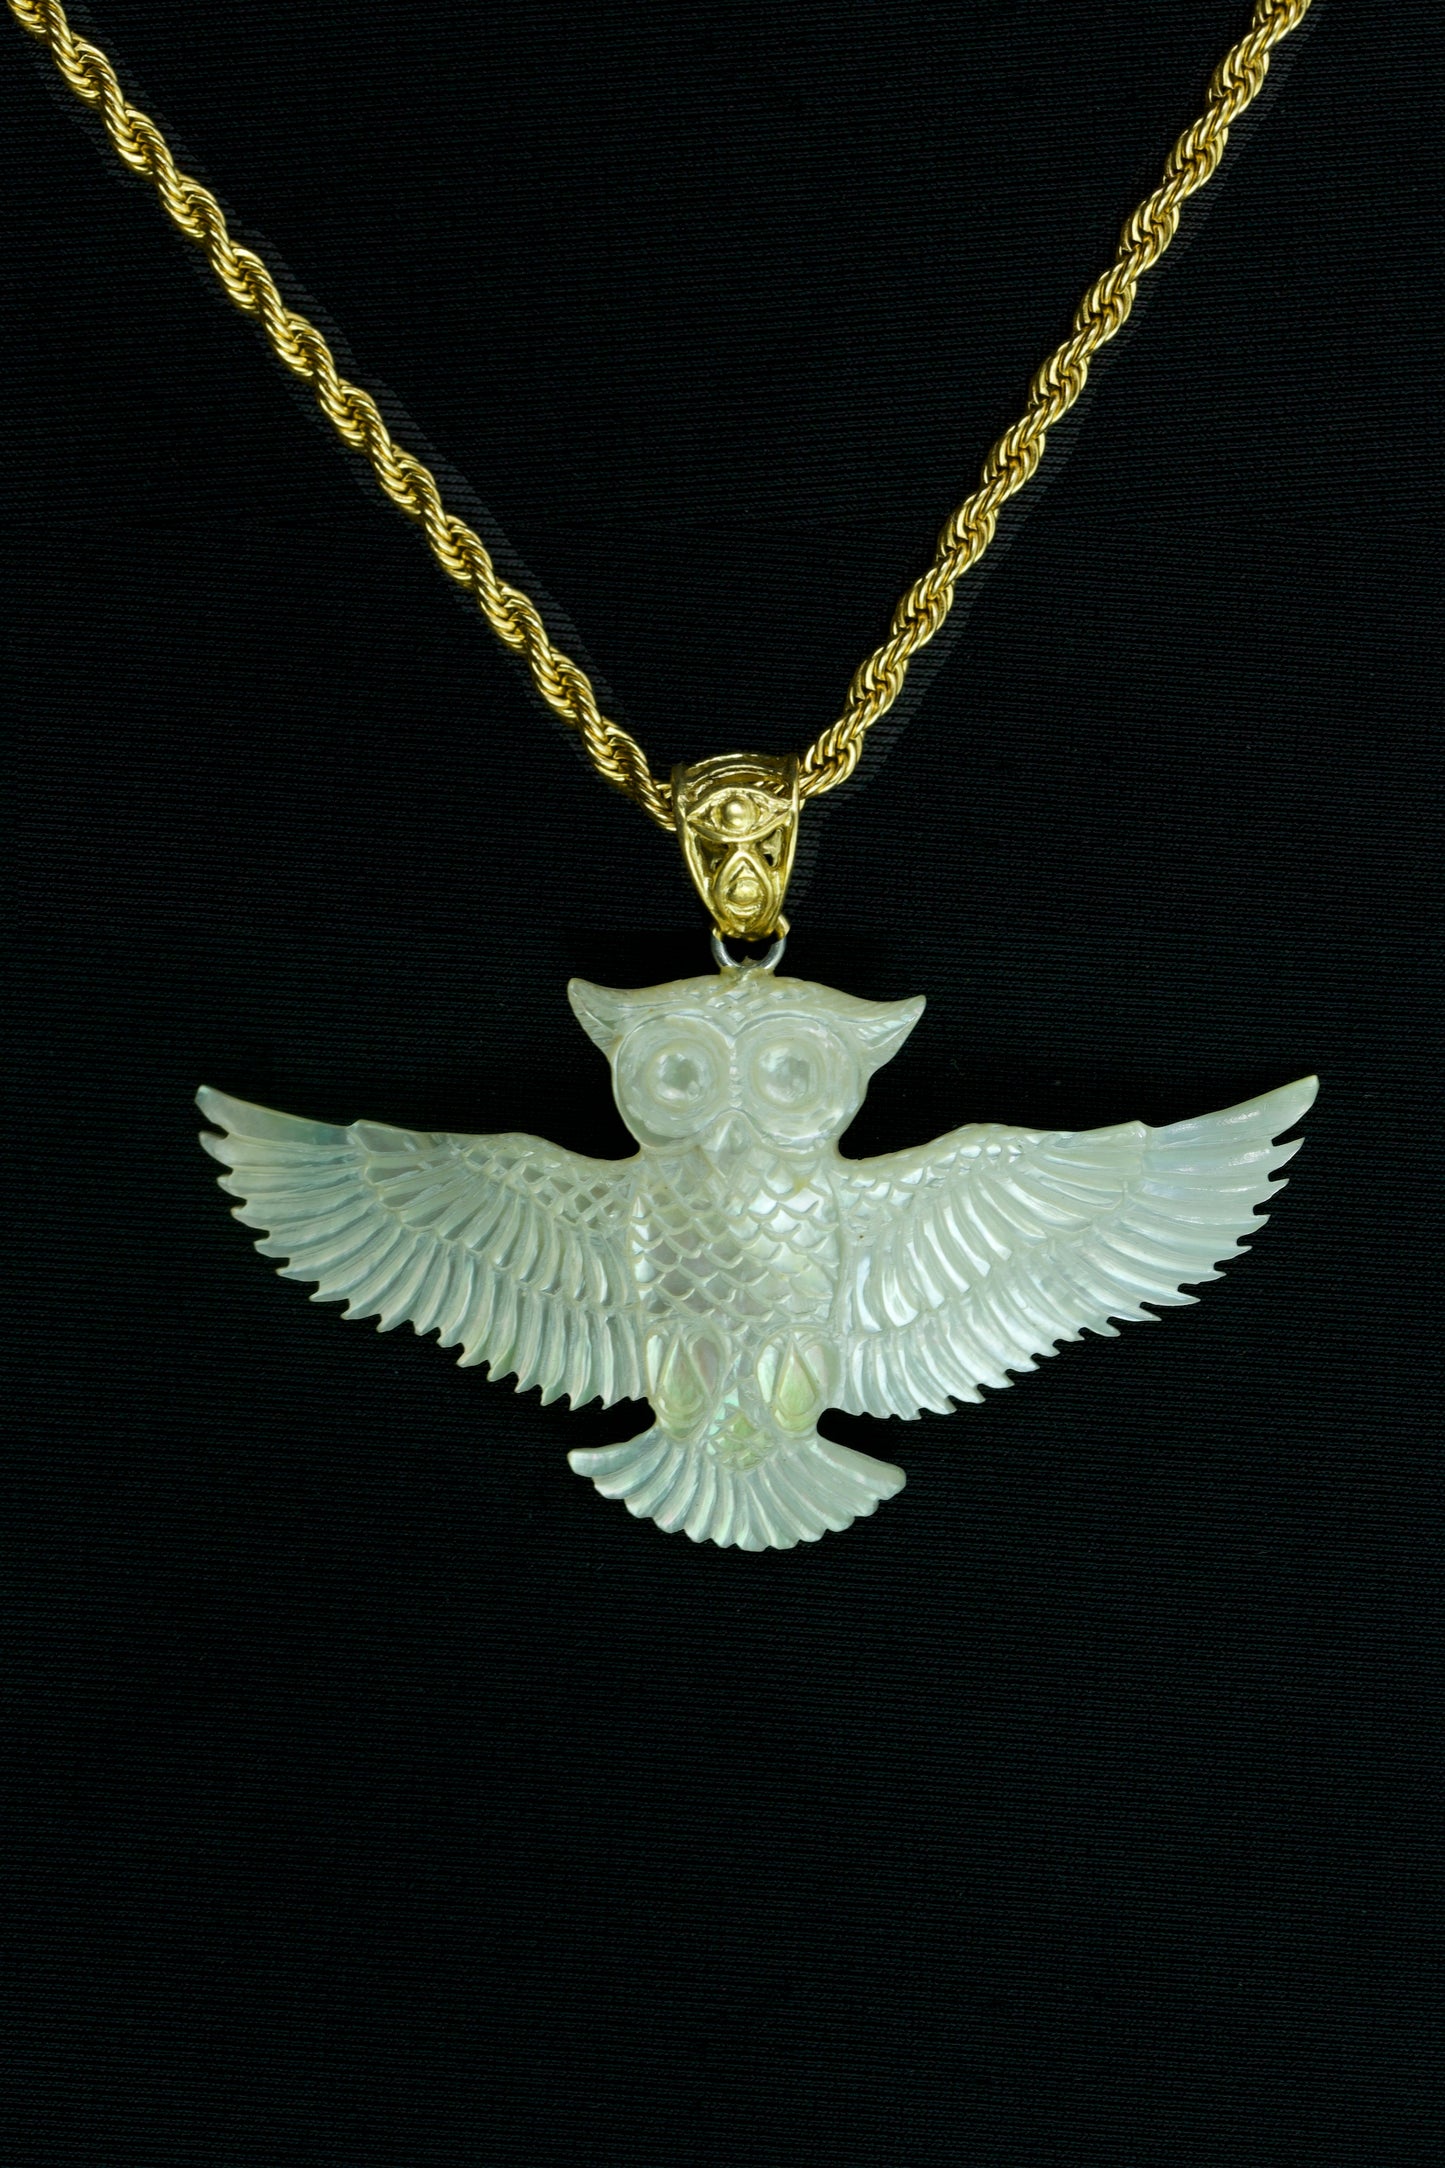 Owl Pendant - Dark Mother of Pearl - Brass Bail